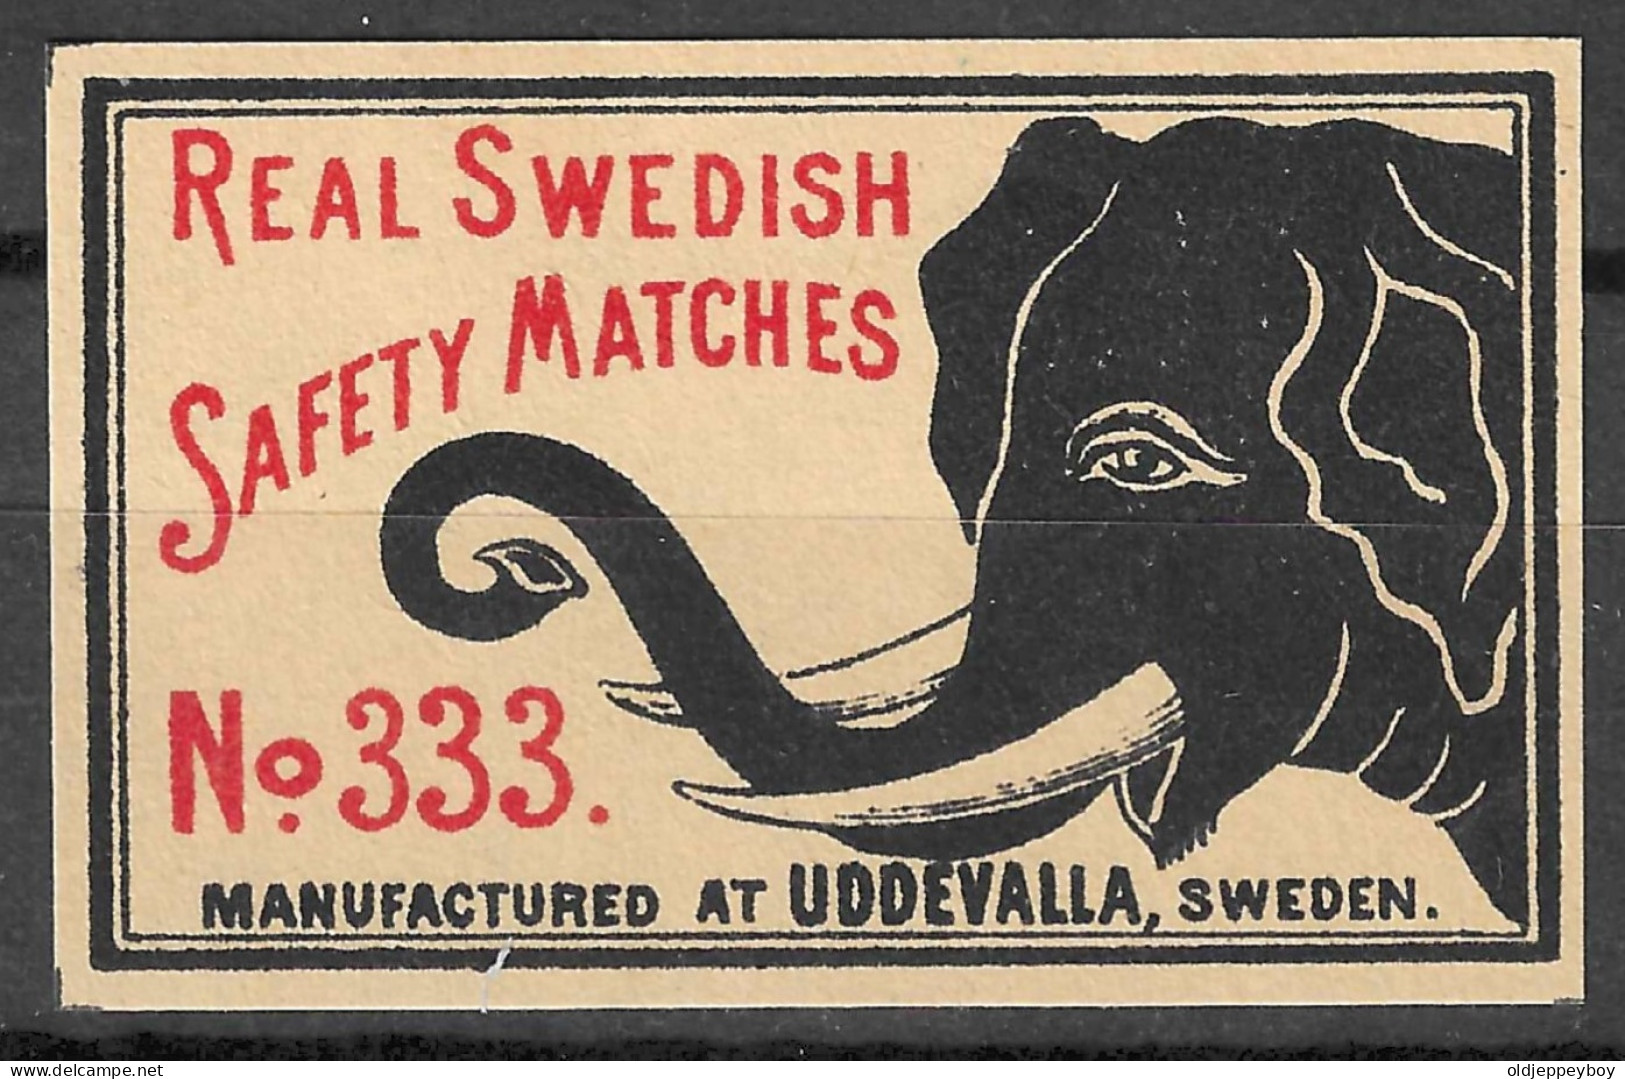 MADE IN SWEDEN UDDEVALLE VINTAGE Phillumeny MATCHBOX LABEL REAL SWEDISH SAFETY MATCHES Nº333  5.5  X 3.5 CM  RARE - Boites D'allumettes - Etiquettes